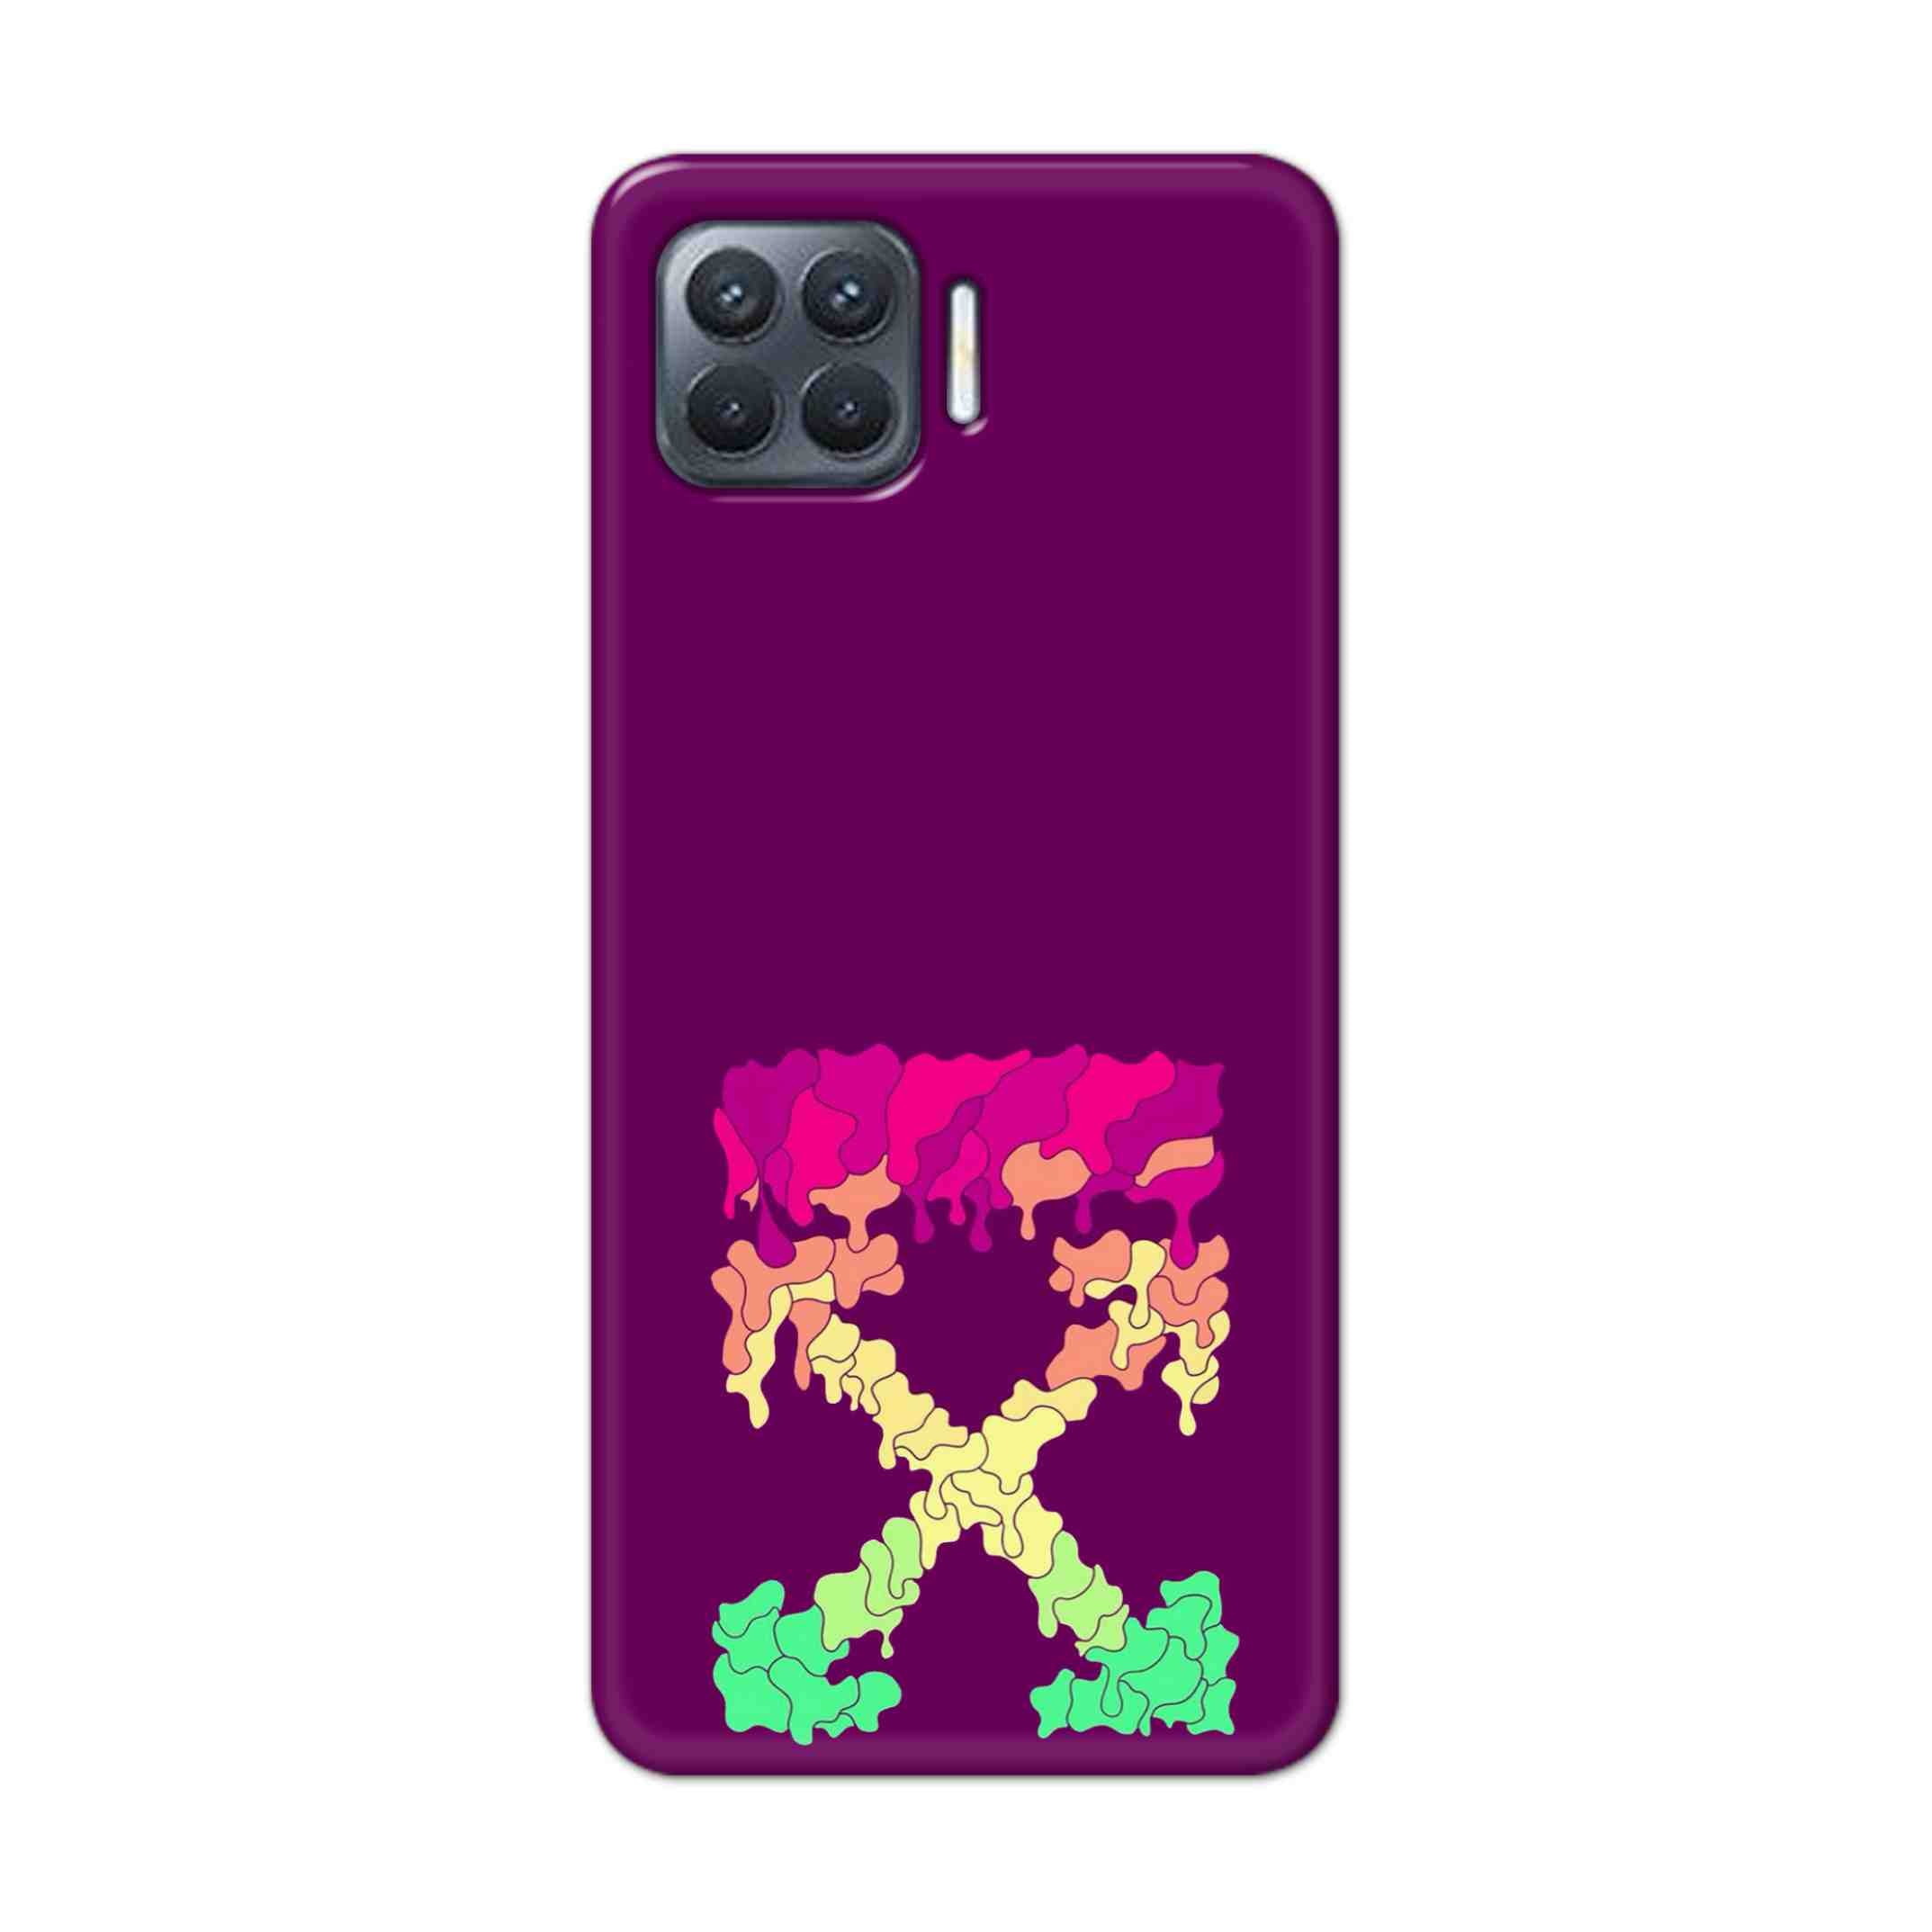 Buy X.O Hard Back Mobile Phone Case Cover For Oppo F17 Pro Online